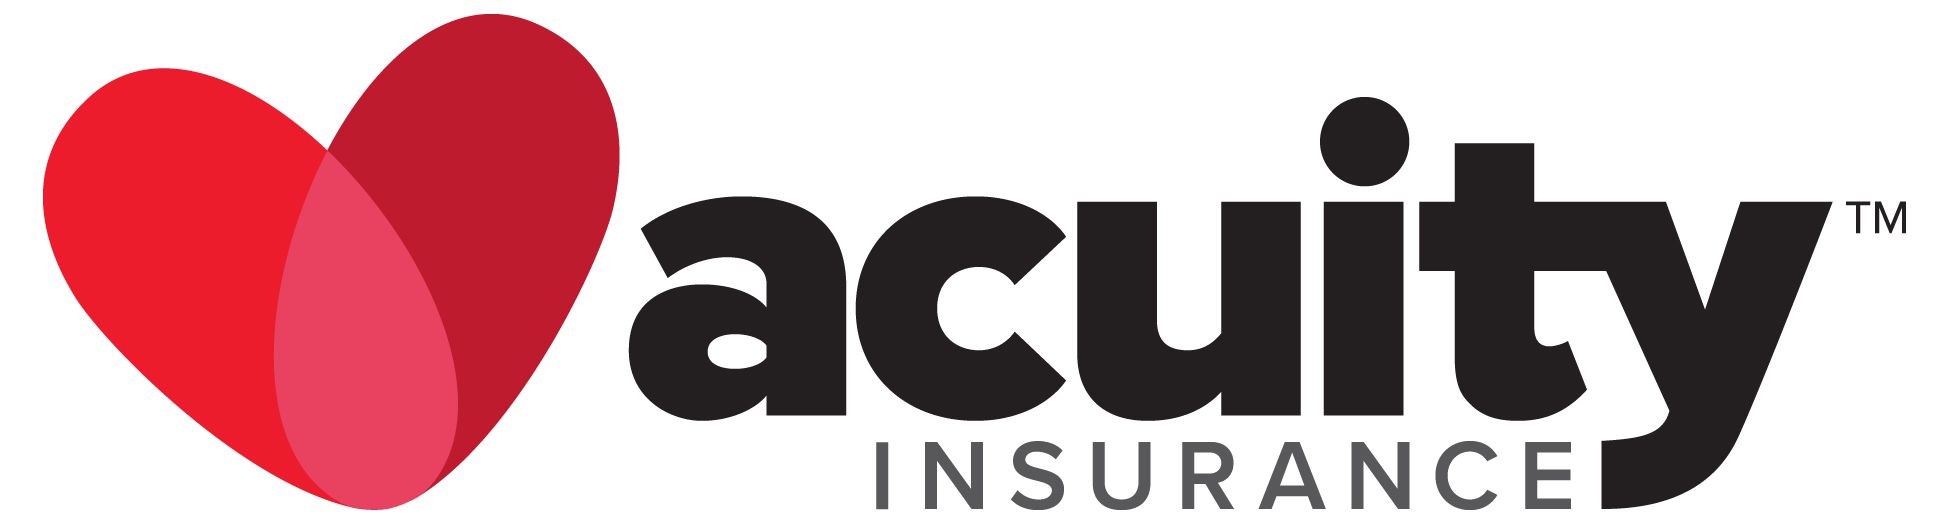 Acuity Mutual Insurance